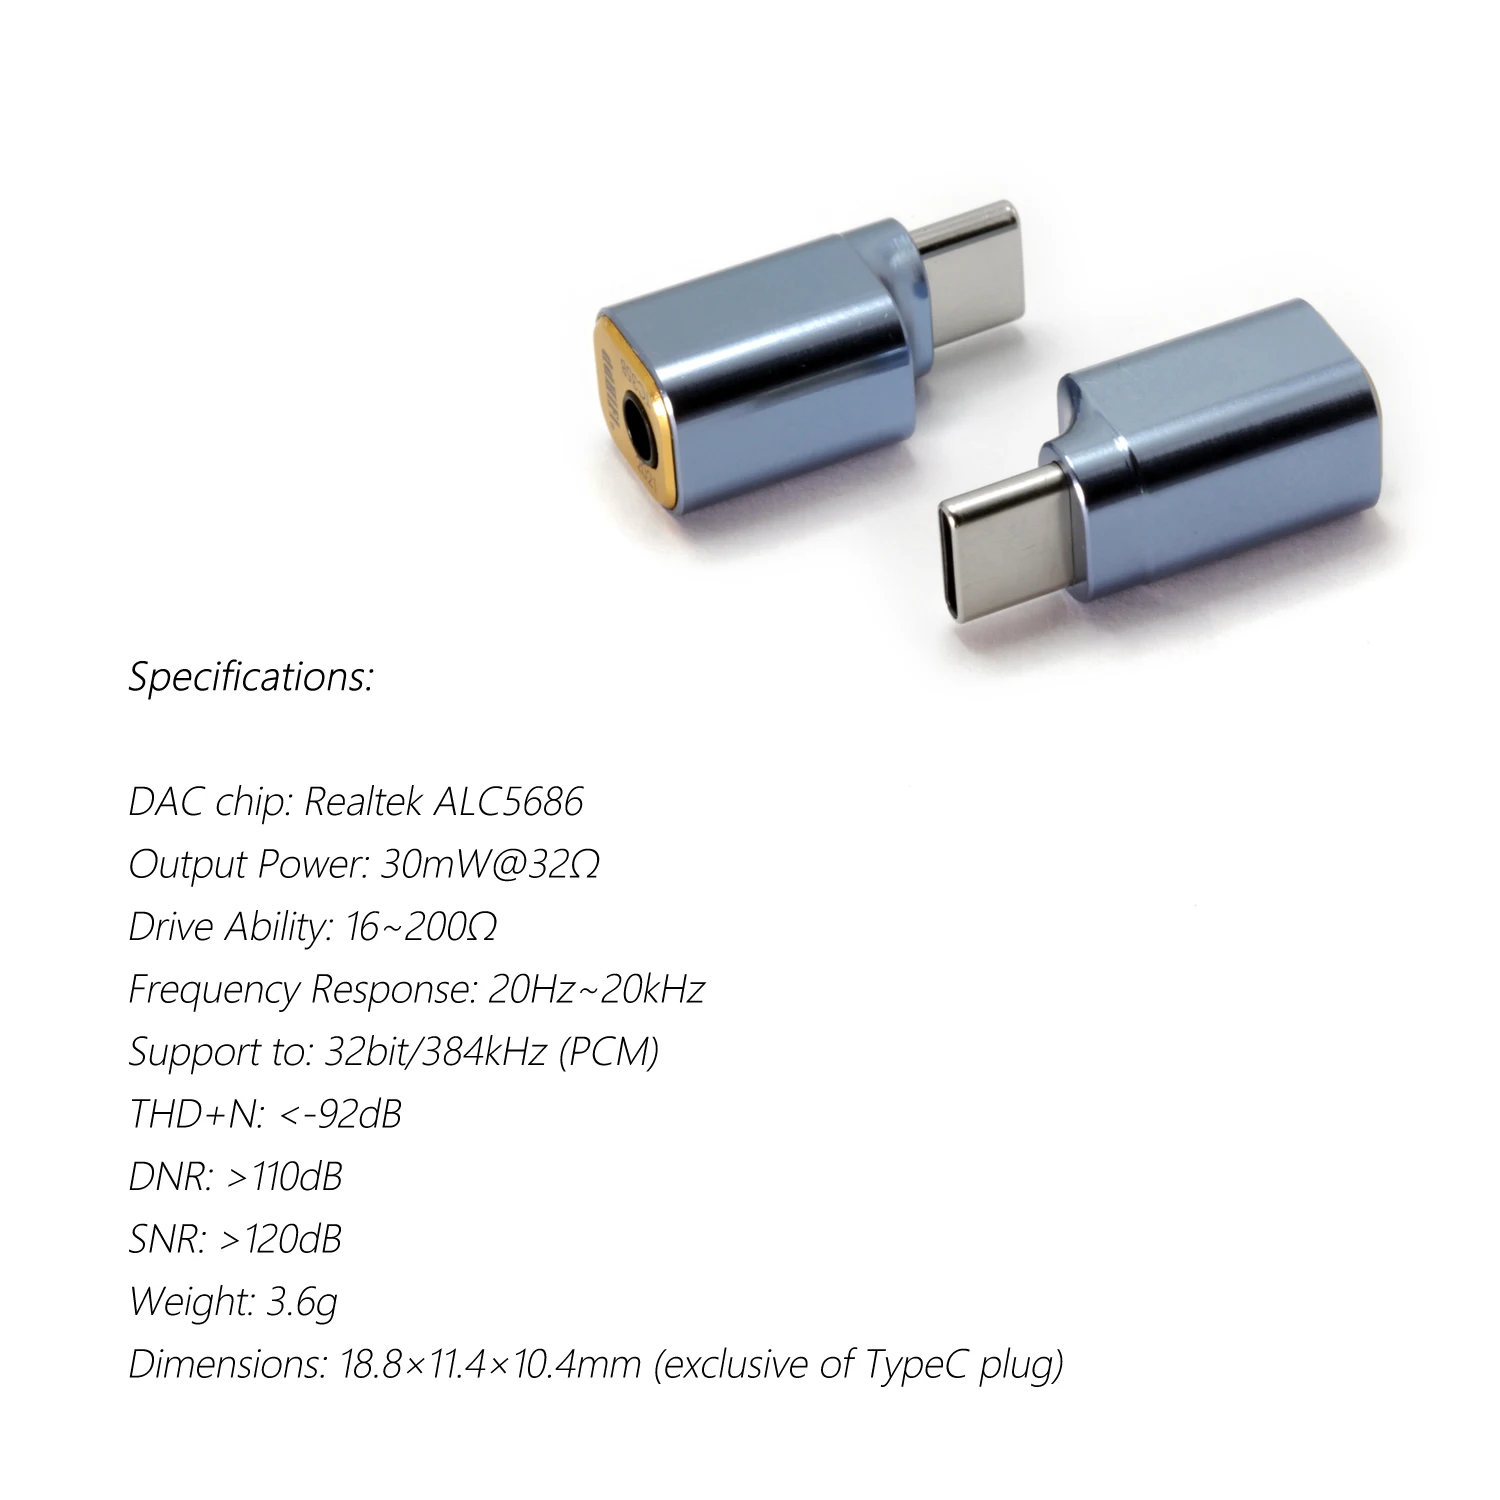 DD ddHiFi Новый Адаптер TC35B USB Type-C для наушников 3,5 мм для телефона Android Huawei Xiaomi Samsung, 384 кГц/32 бит